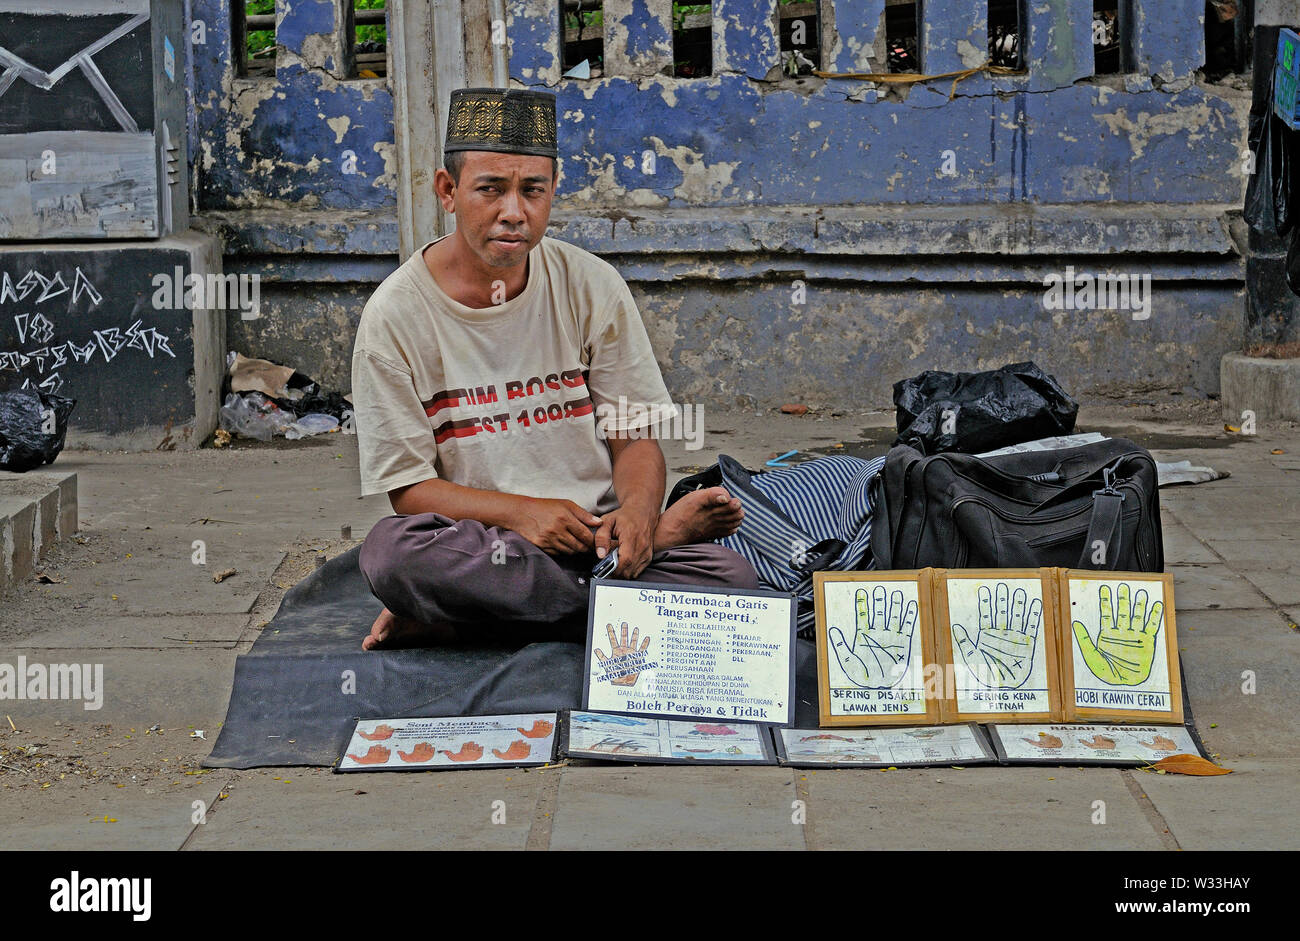 jakarta, dki jakarta / indonesia - may 05, 2010: a palm reader offering his services at the sidewalk of  jalan pintu besar utara in kota old town Stock Photo